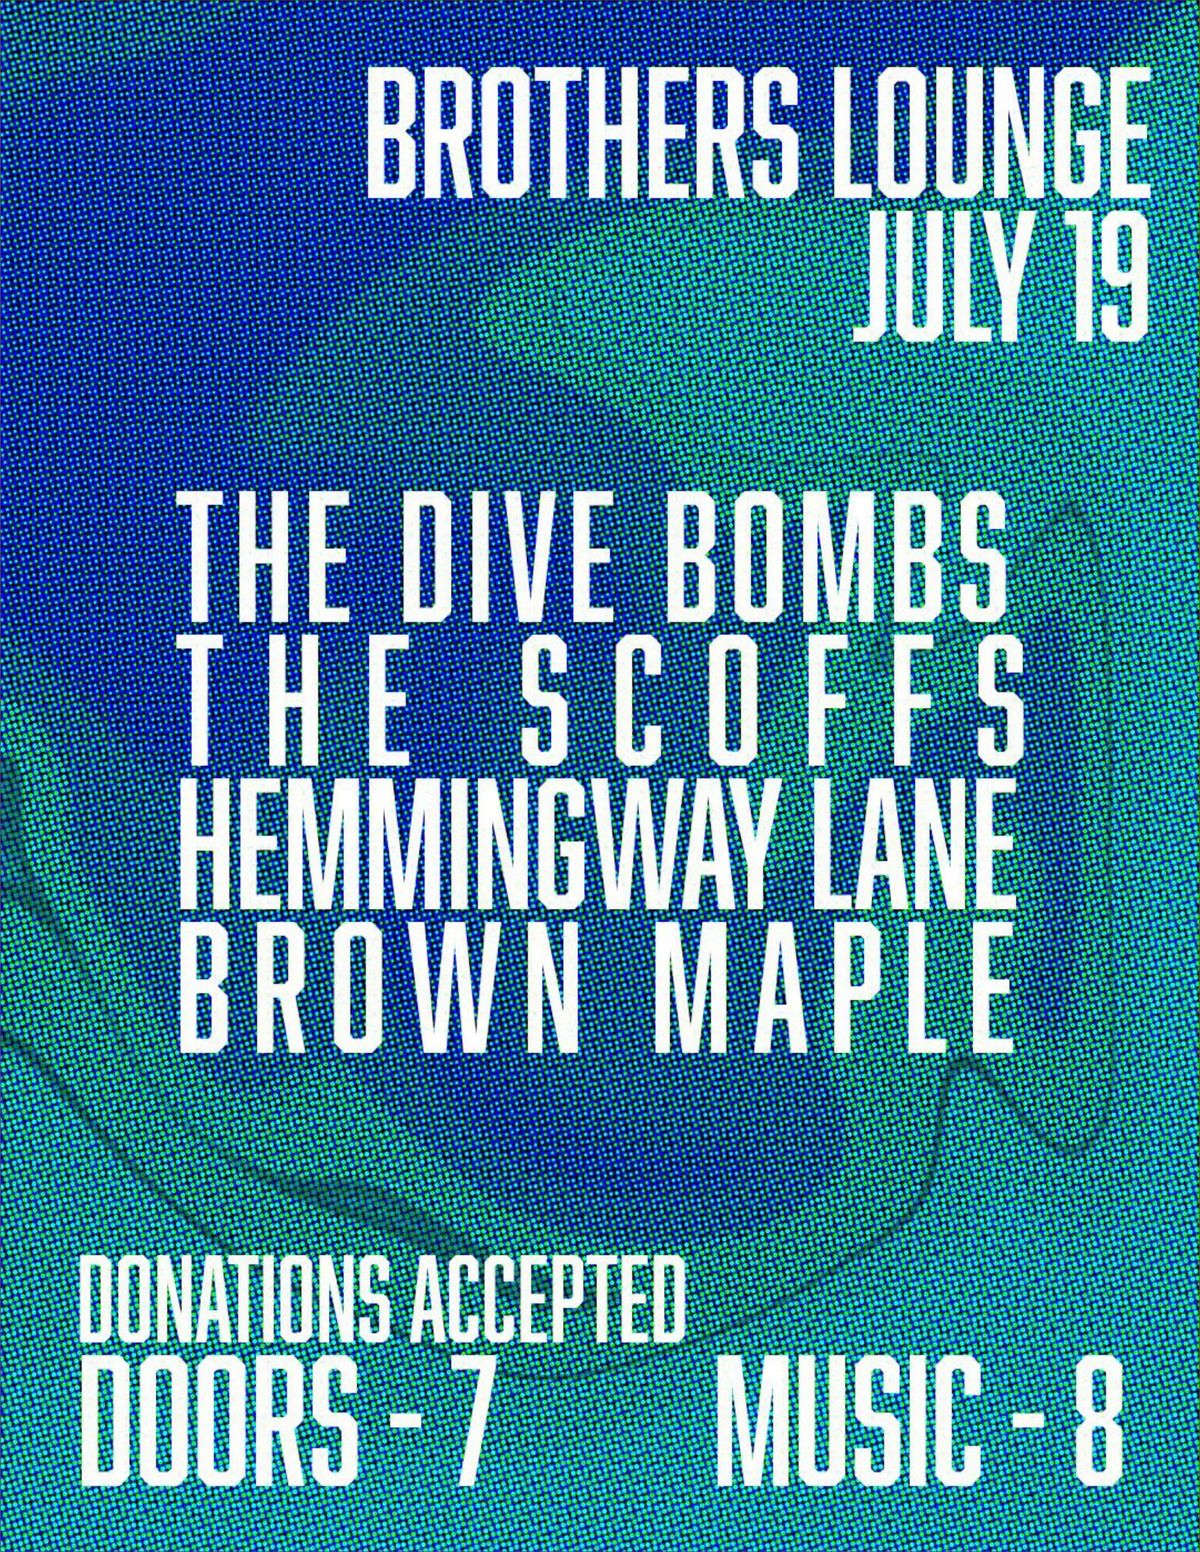 Dive Bombs \/ The Scoffs \/ Hemingway Lane \/ Brown Maple